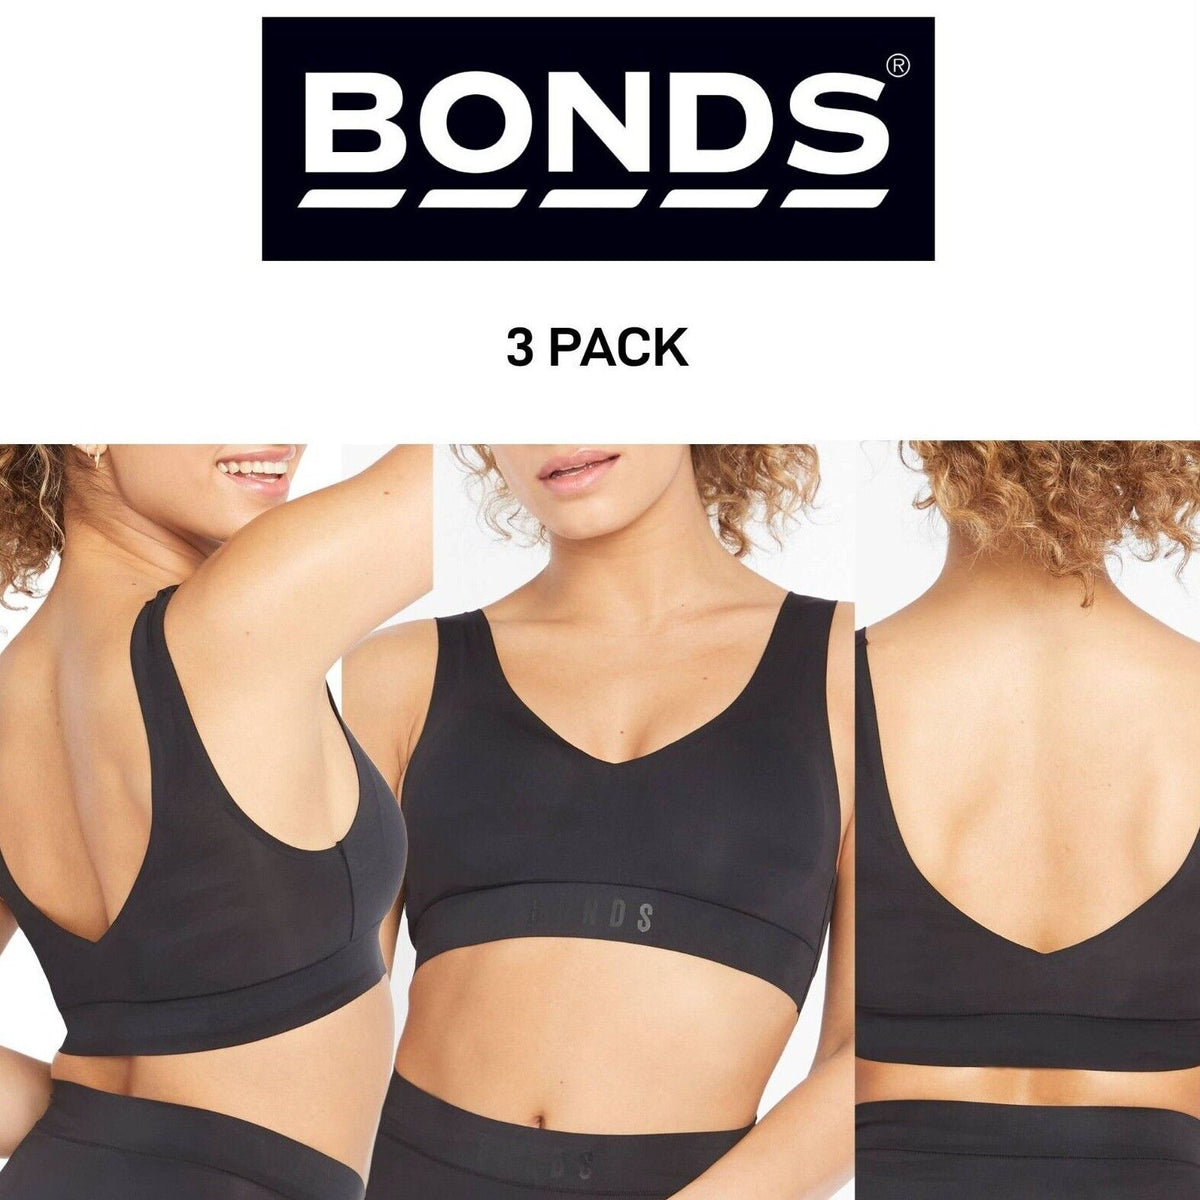 Bonds Womens Invisi Crop V-Neck Style Bra Sleek & Lightweight Comfy 3 Pack YX7N